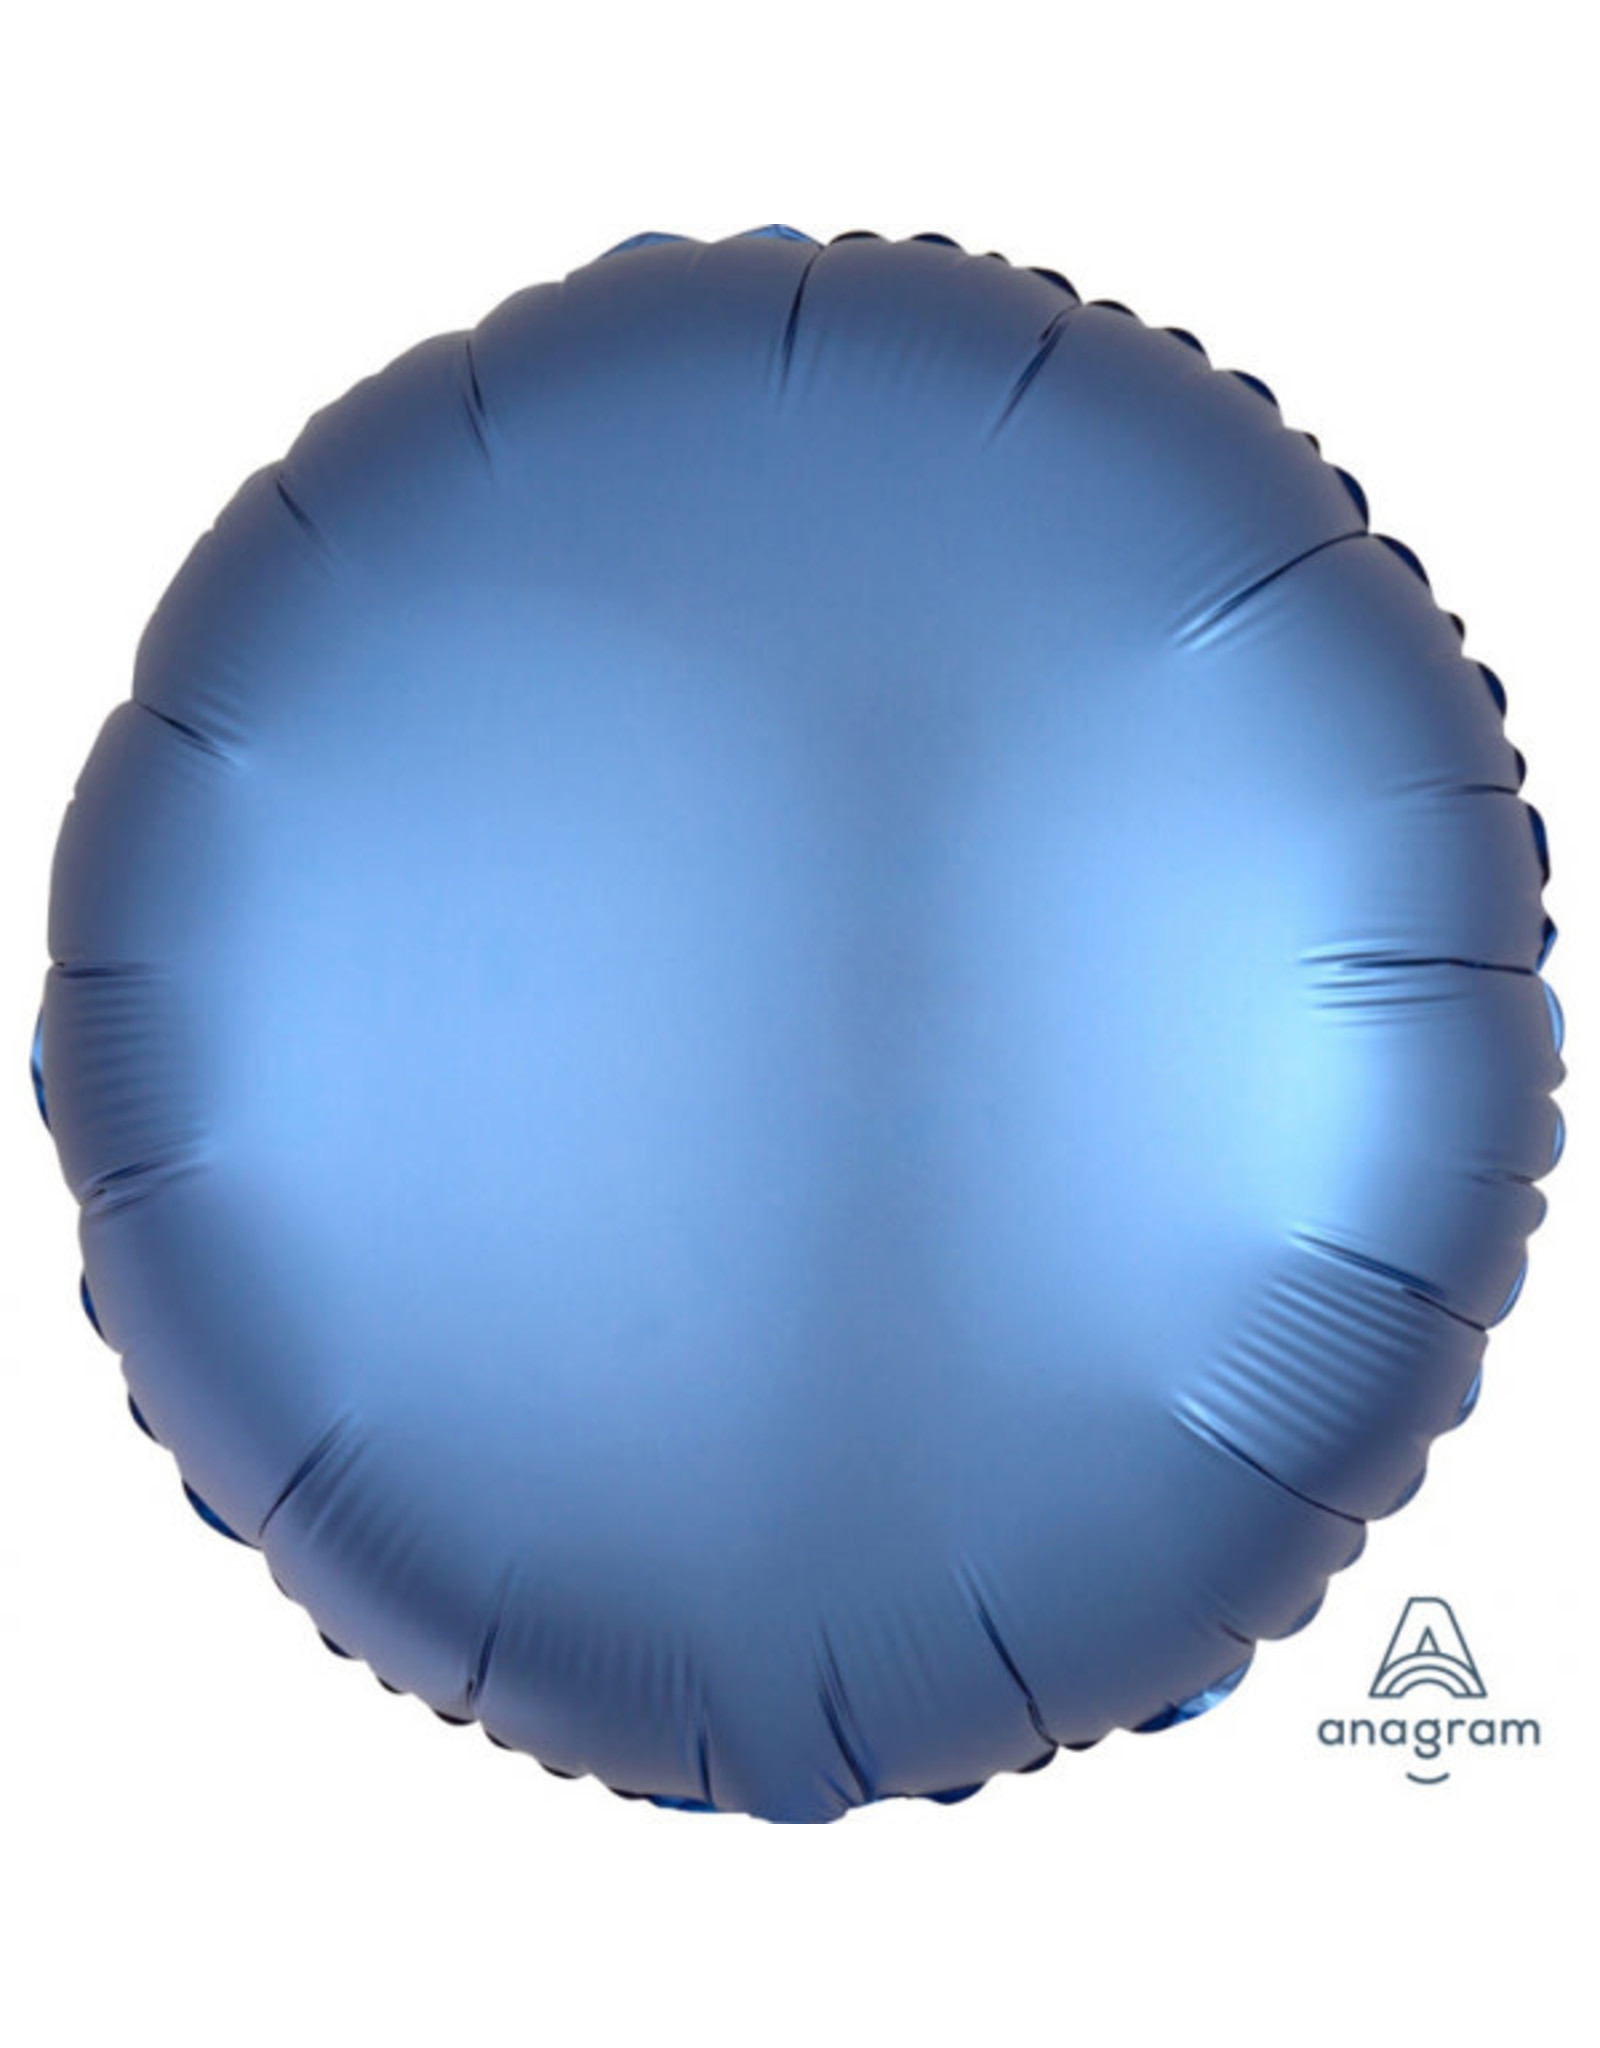 Amscan folieballon Azure blauw vorm rond 43 cm